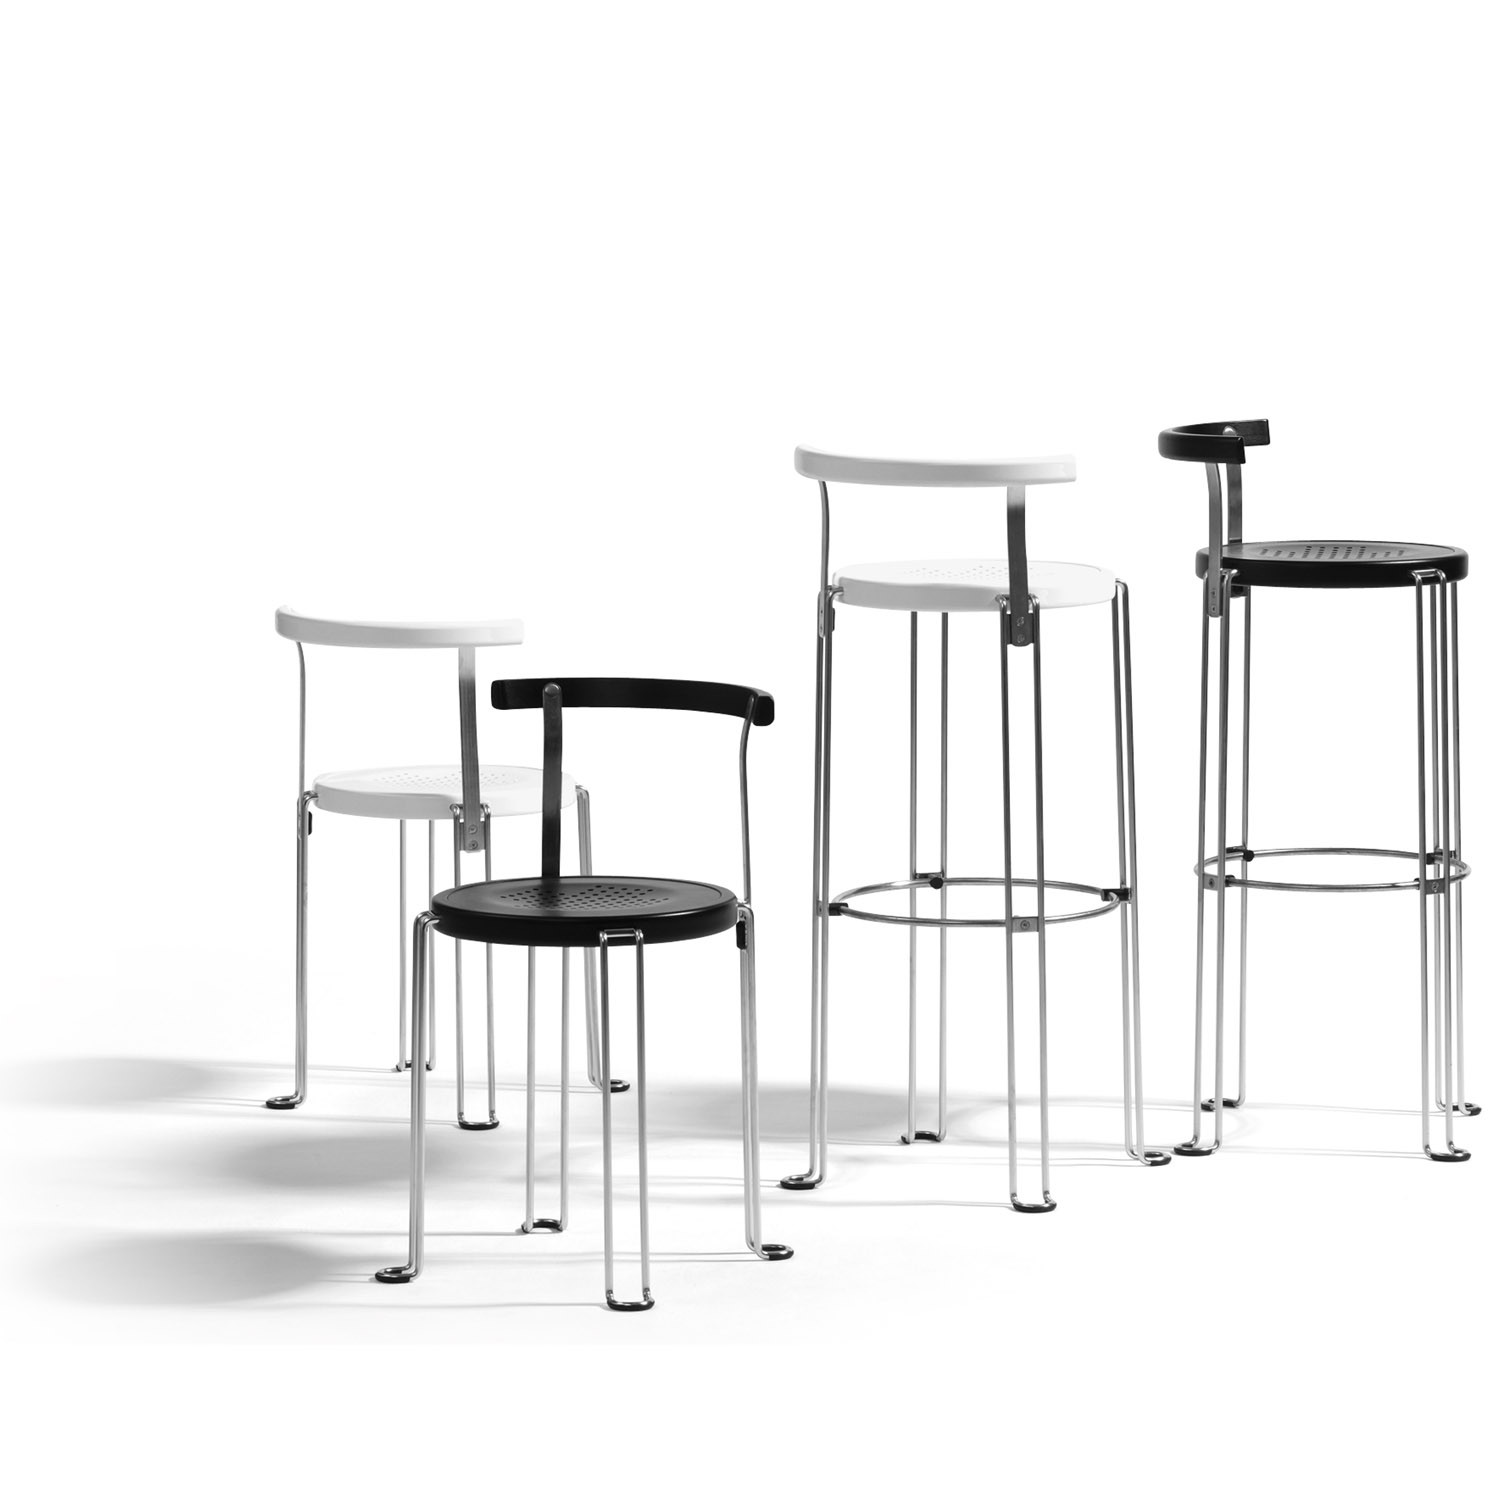 B4-47 Chairs and Bar Stools Range